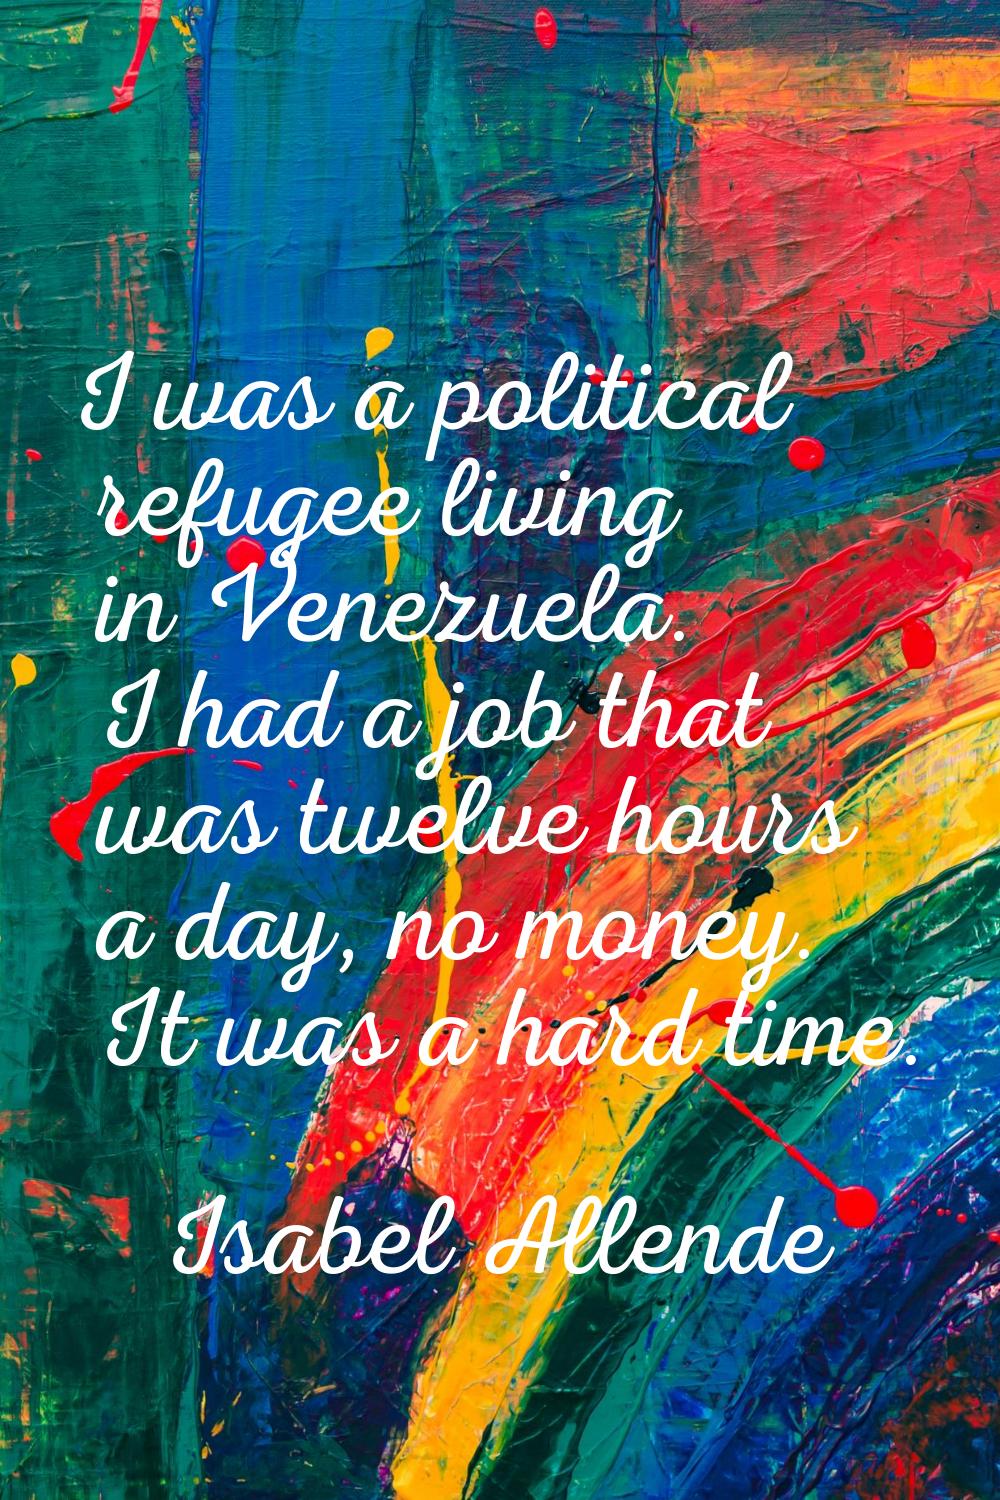 I was a political refugee living in Venezuela. I had a job that was twelve hours a day, no money. I